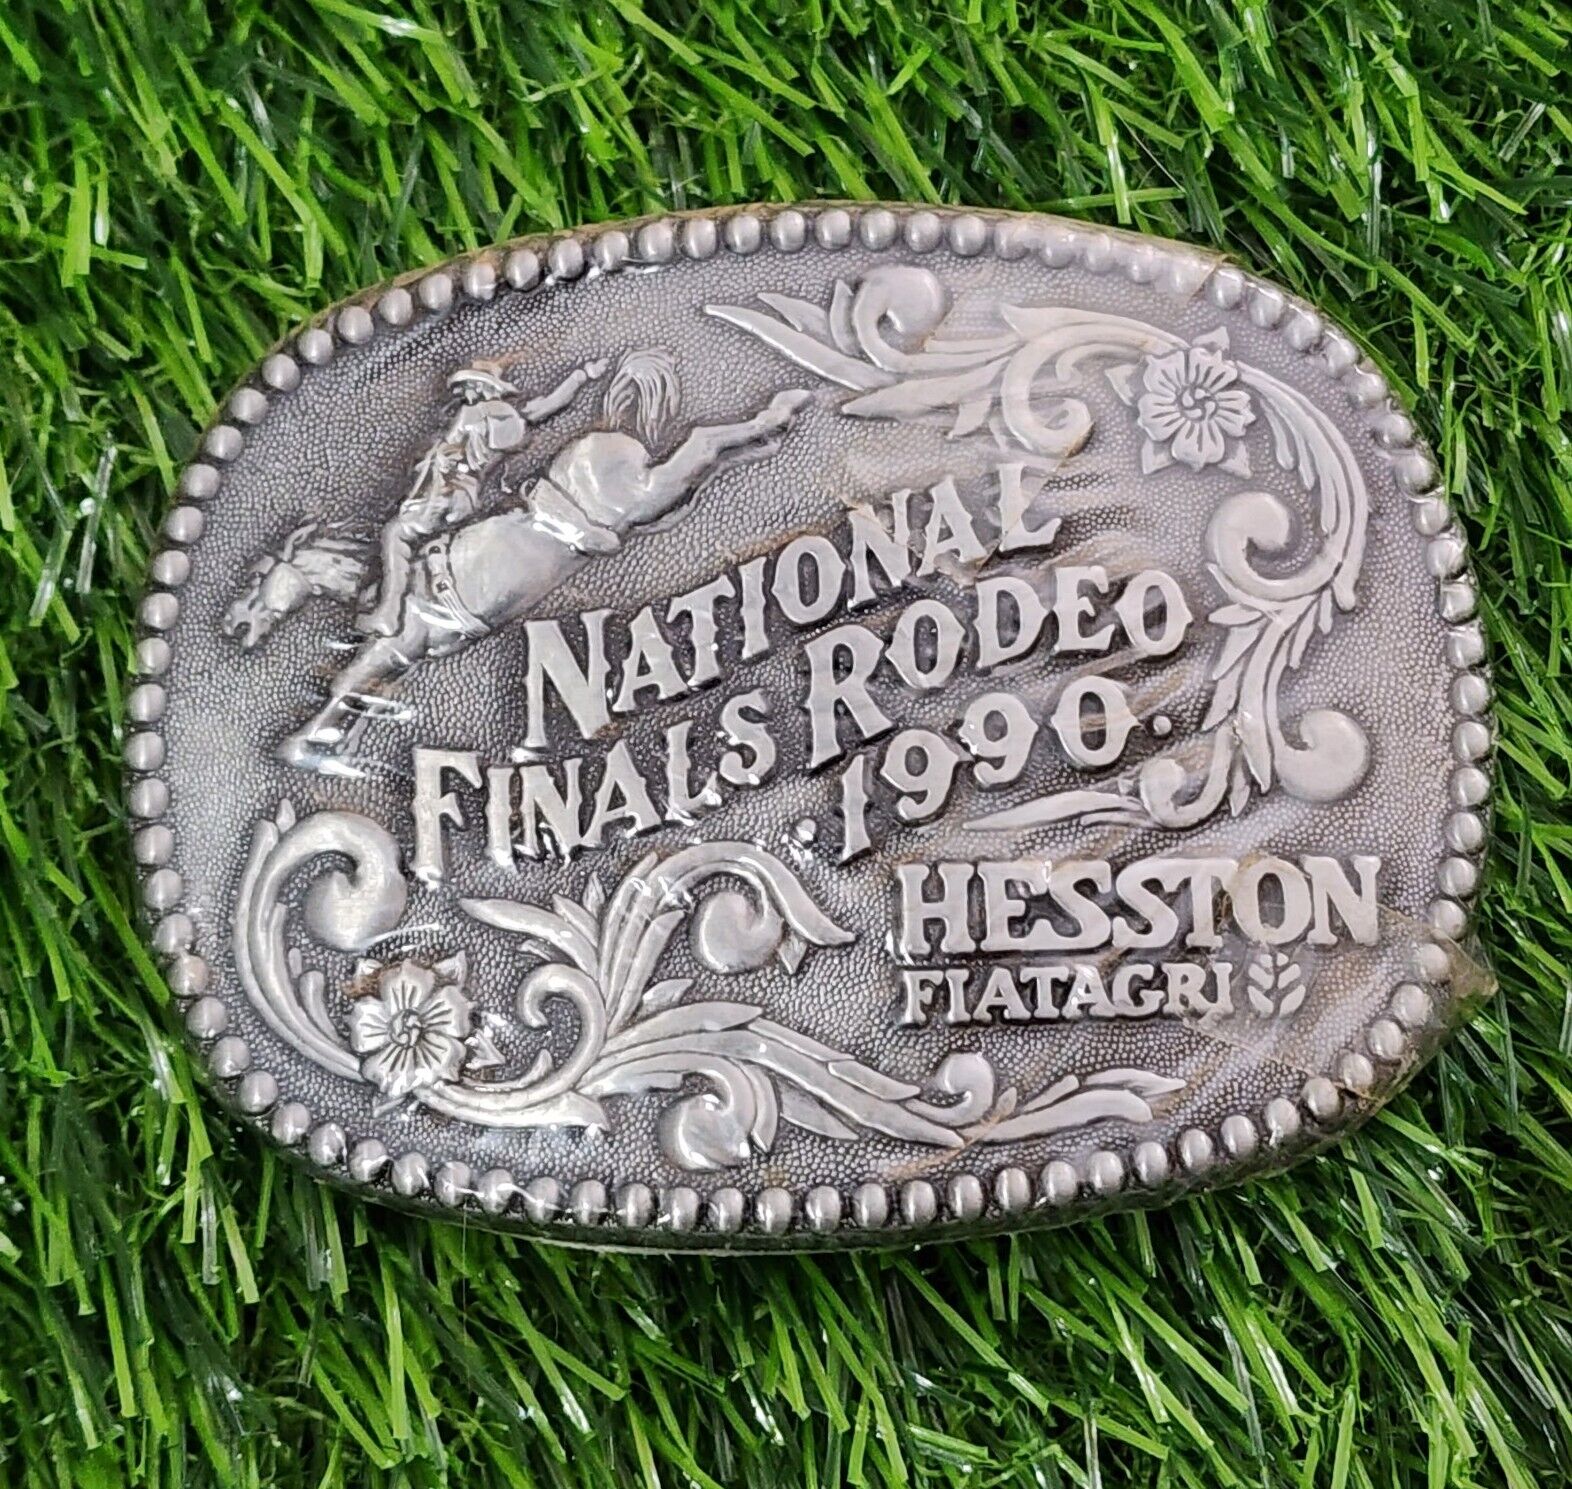 Hesston National Finals Rodeo Belt Buckle 1990 Commemorative Series 